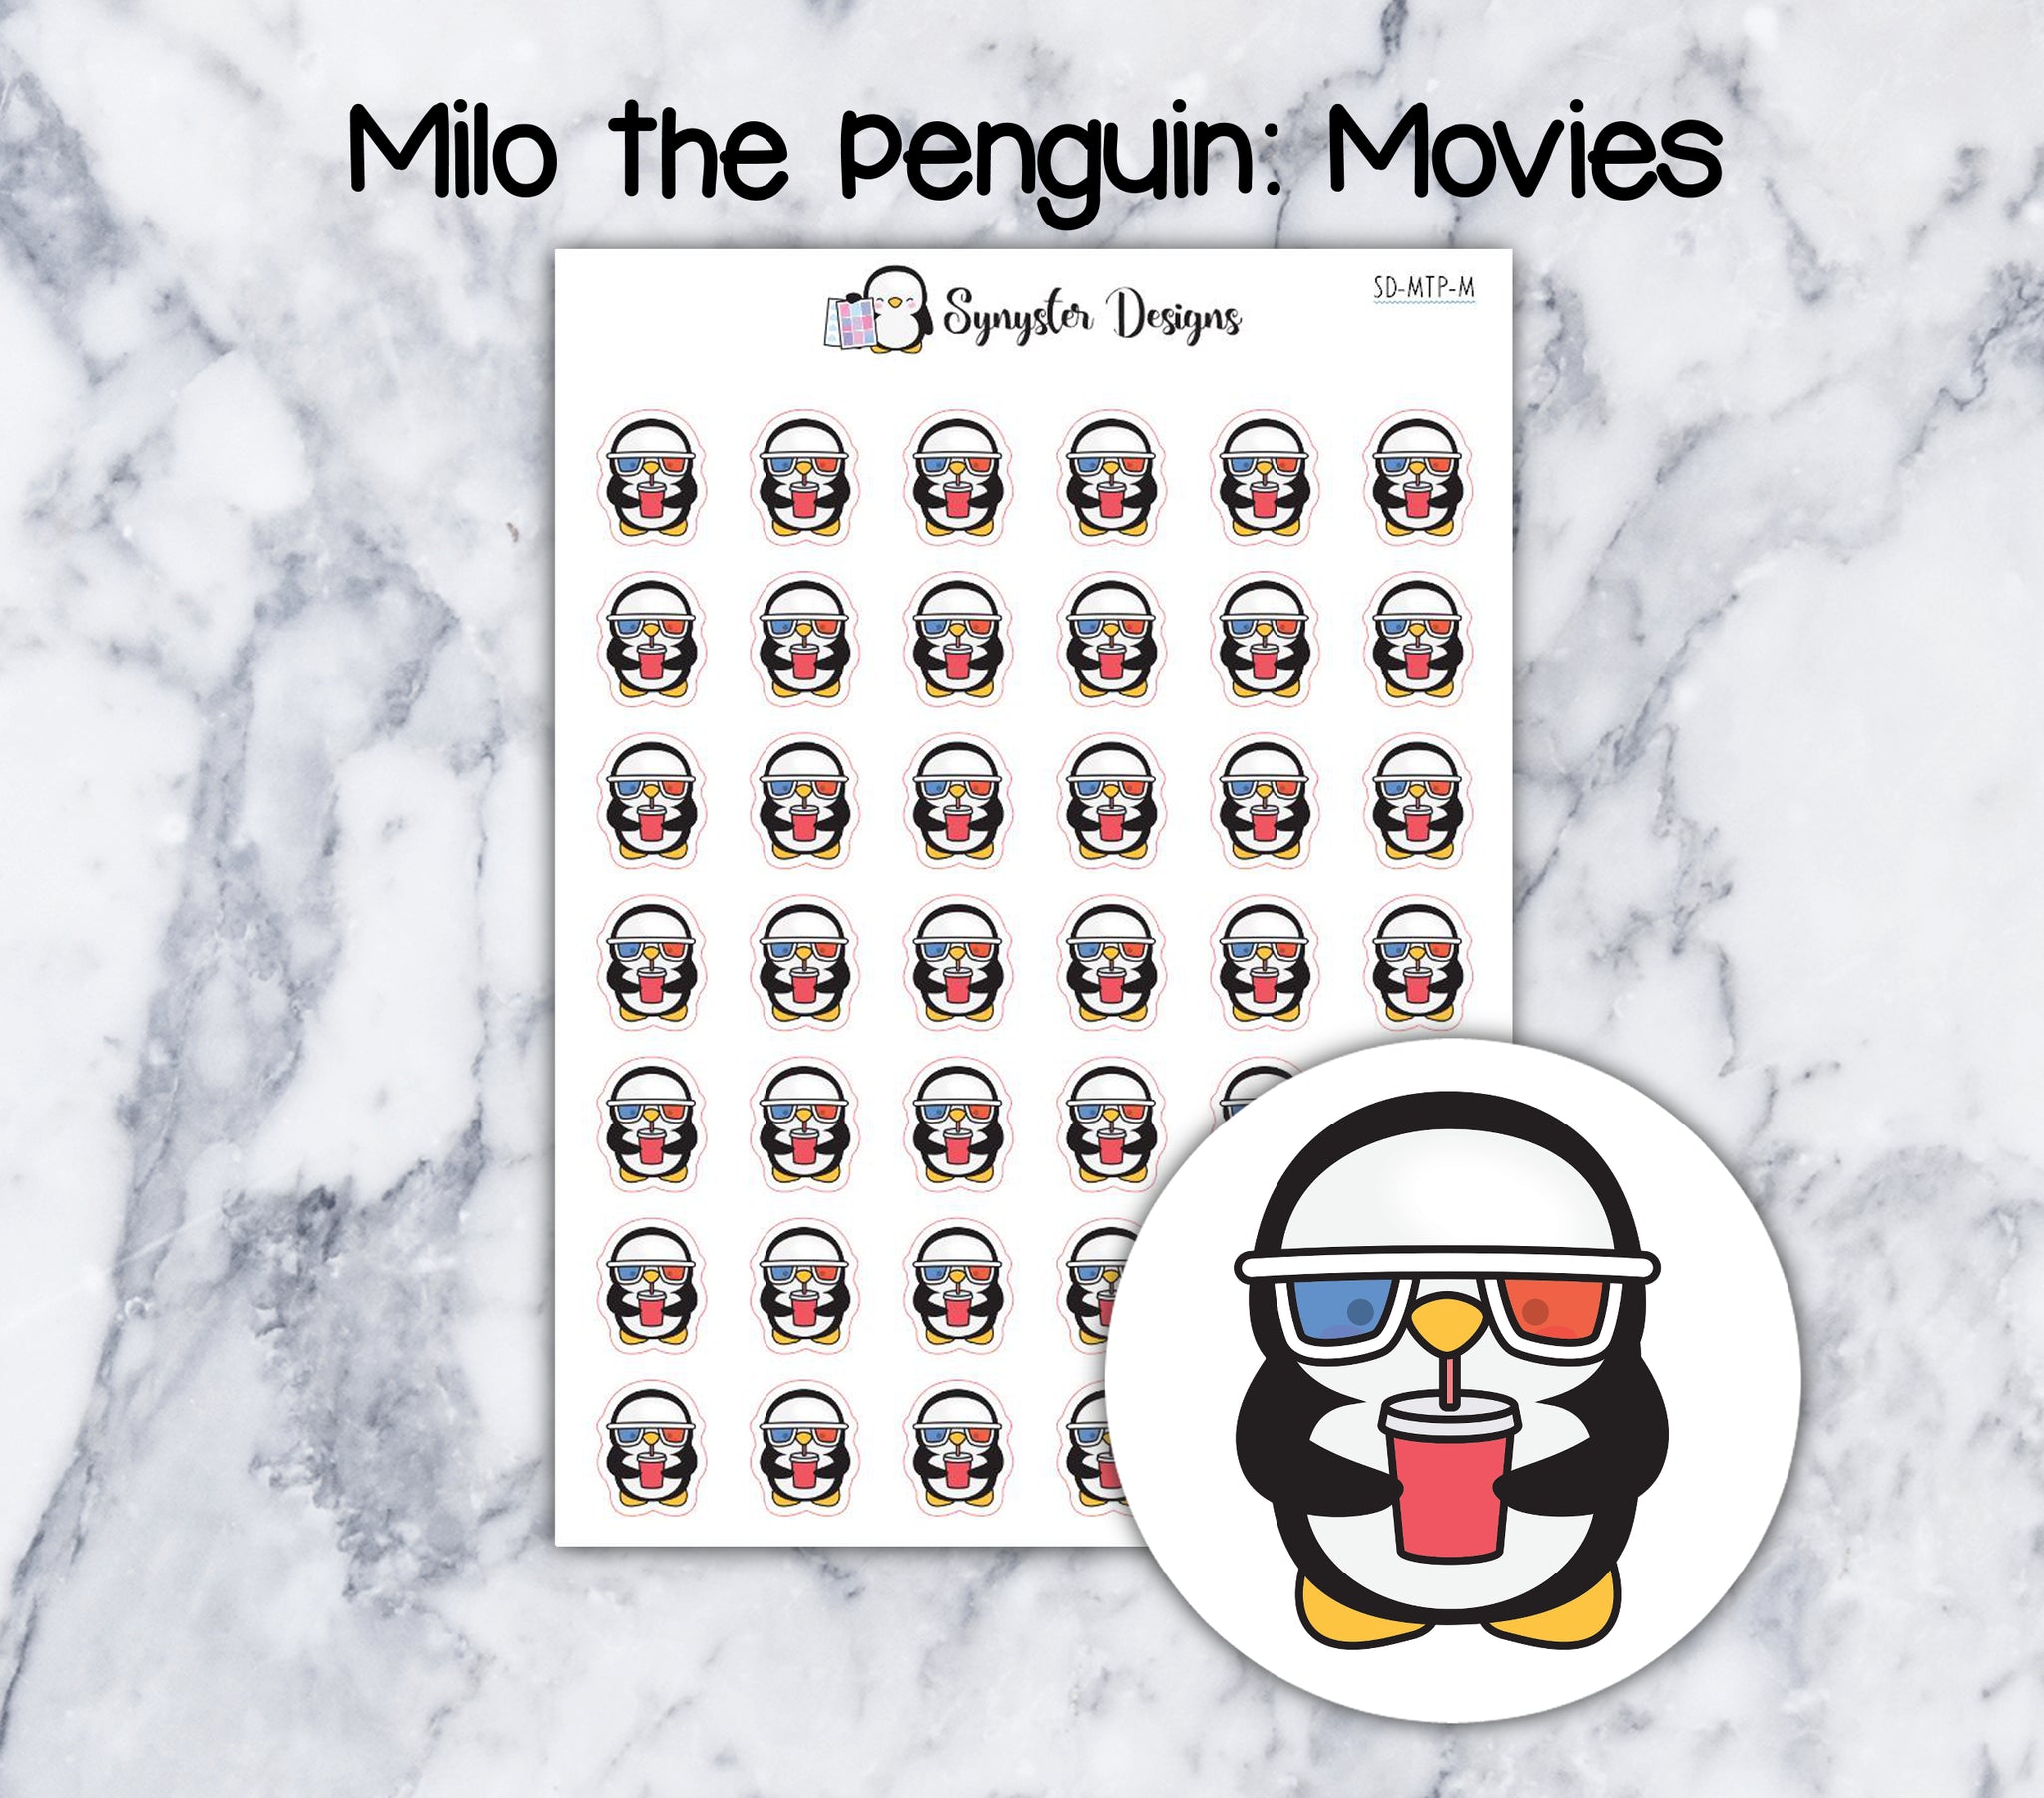 Movies Milo the Penguin